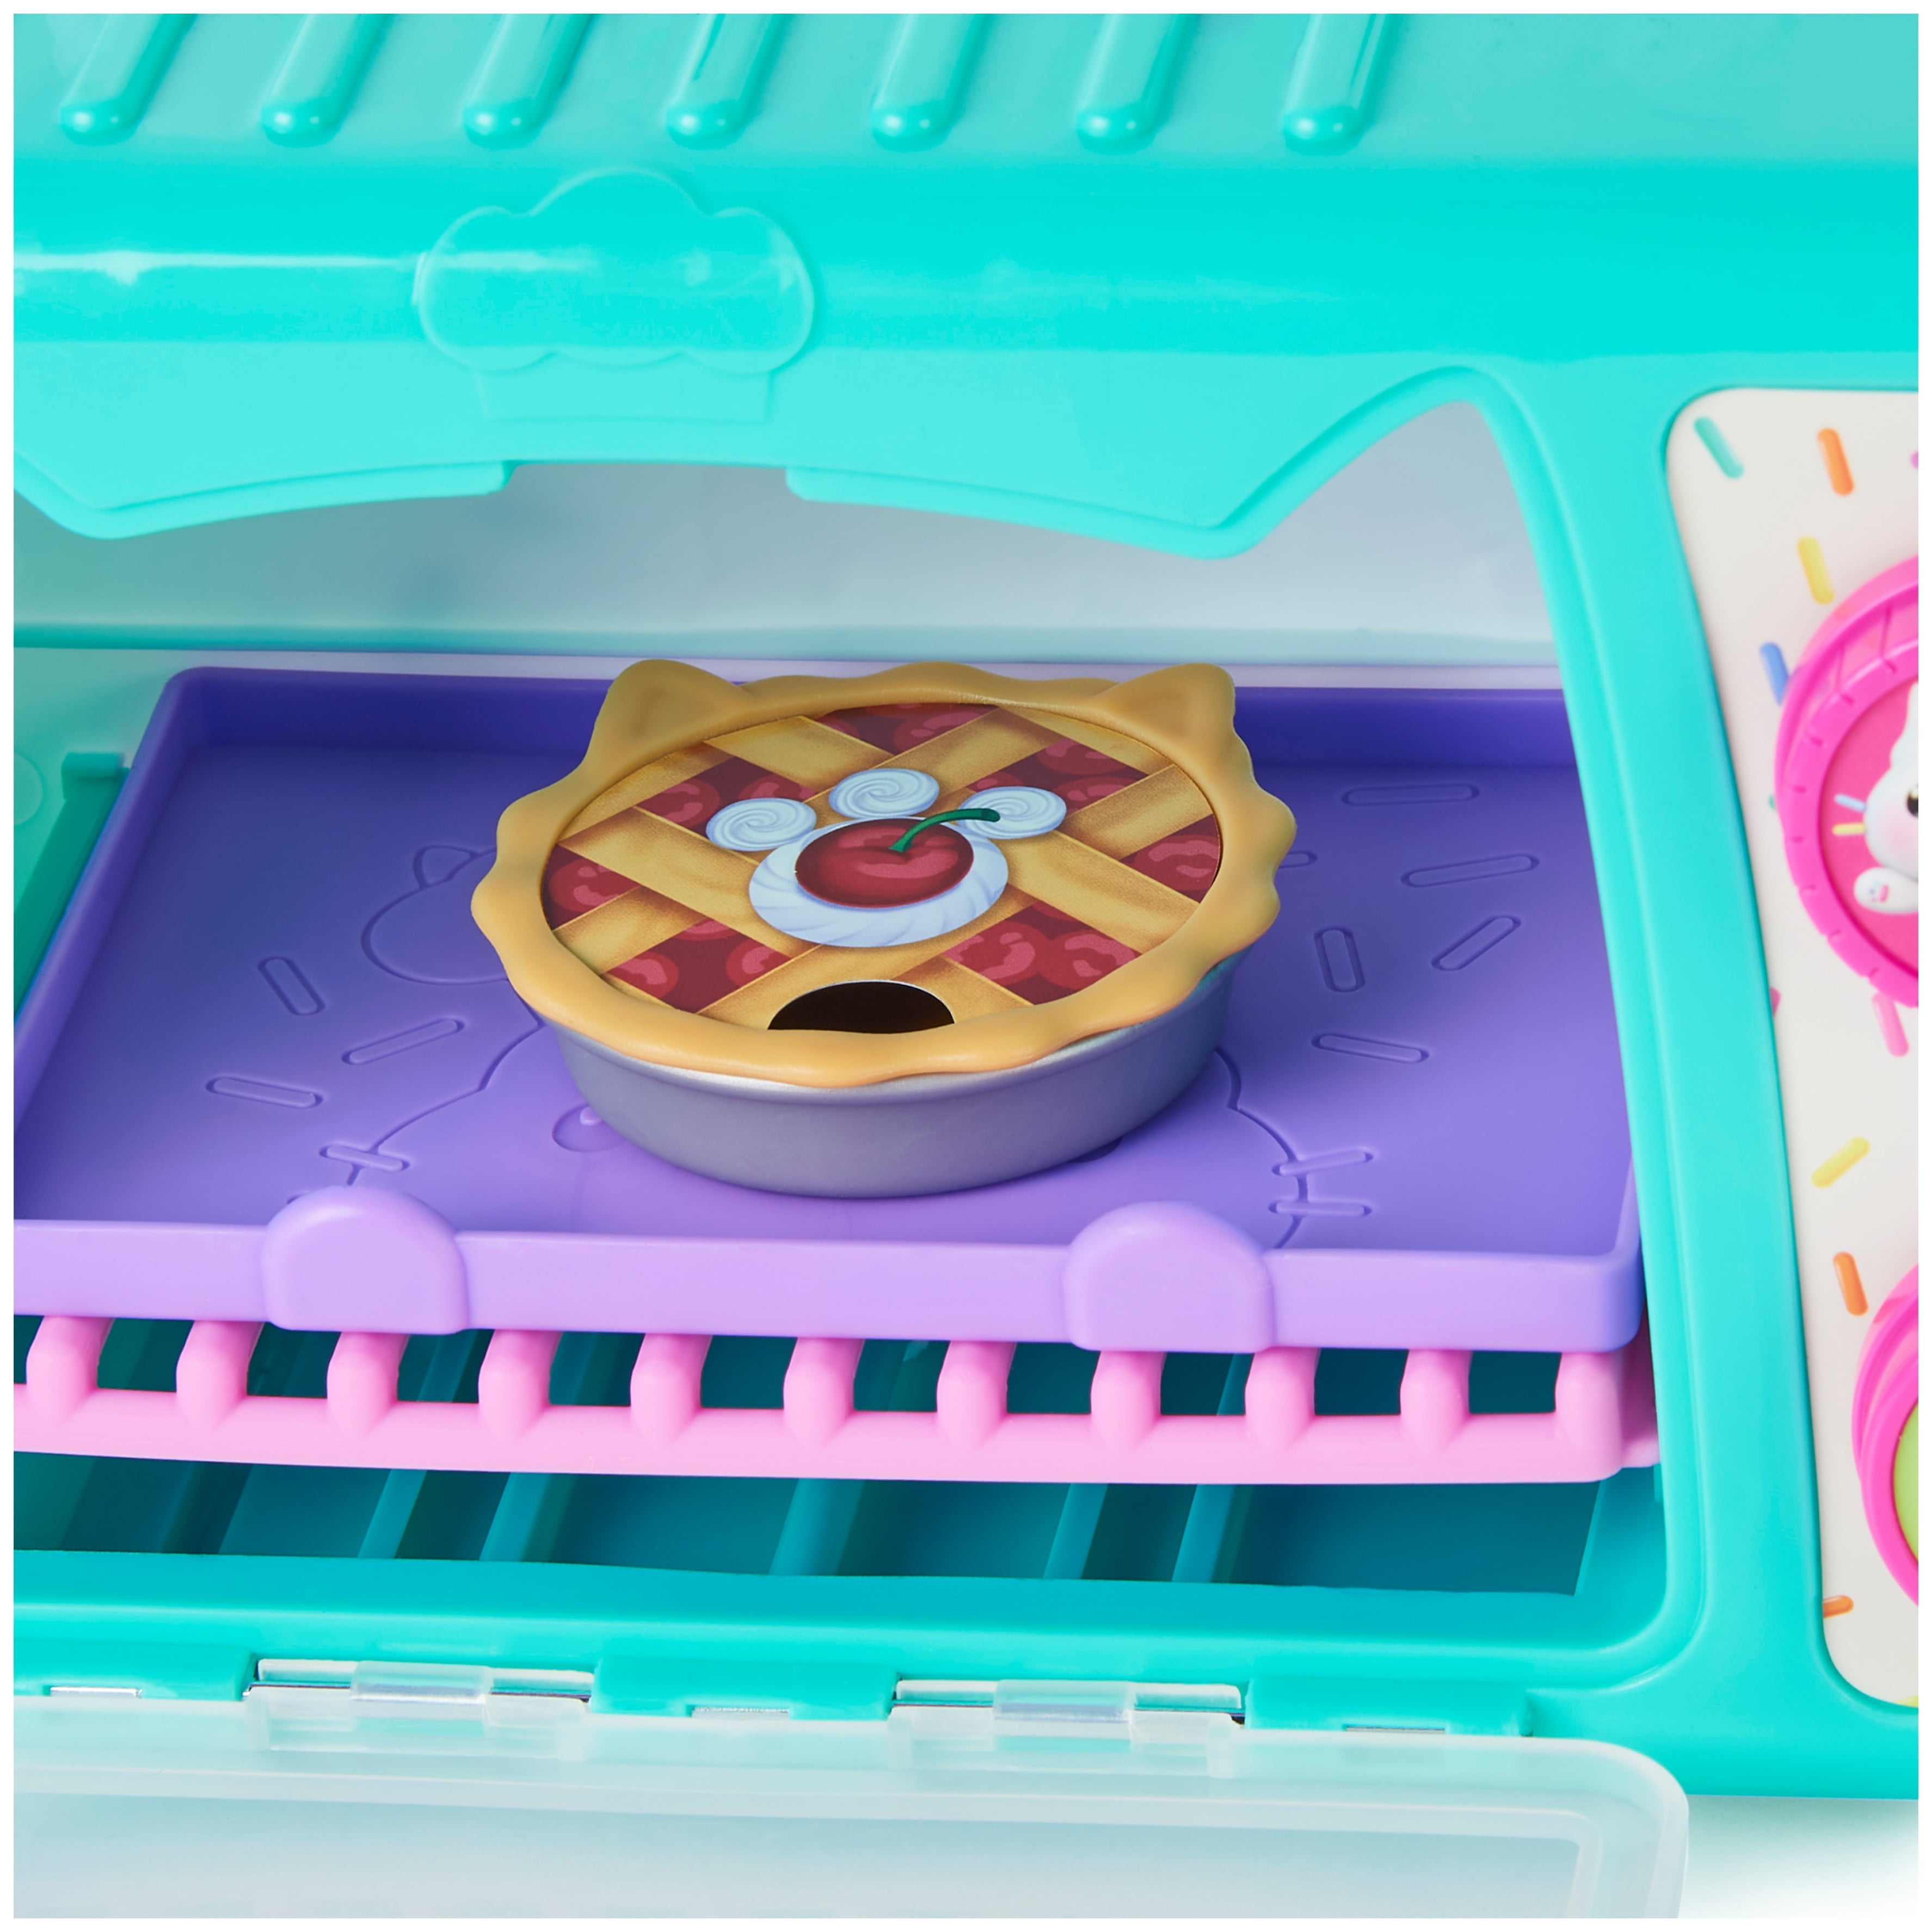 Gabby's Dollhouse - Kit de jeu Baking with Cakey Cuisine avec